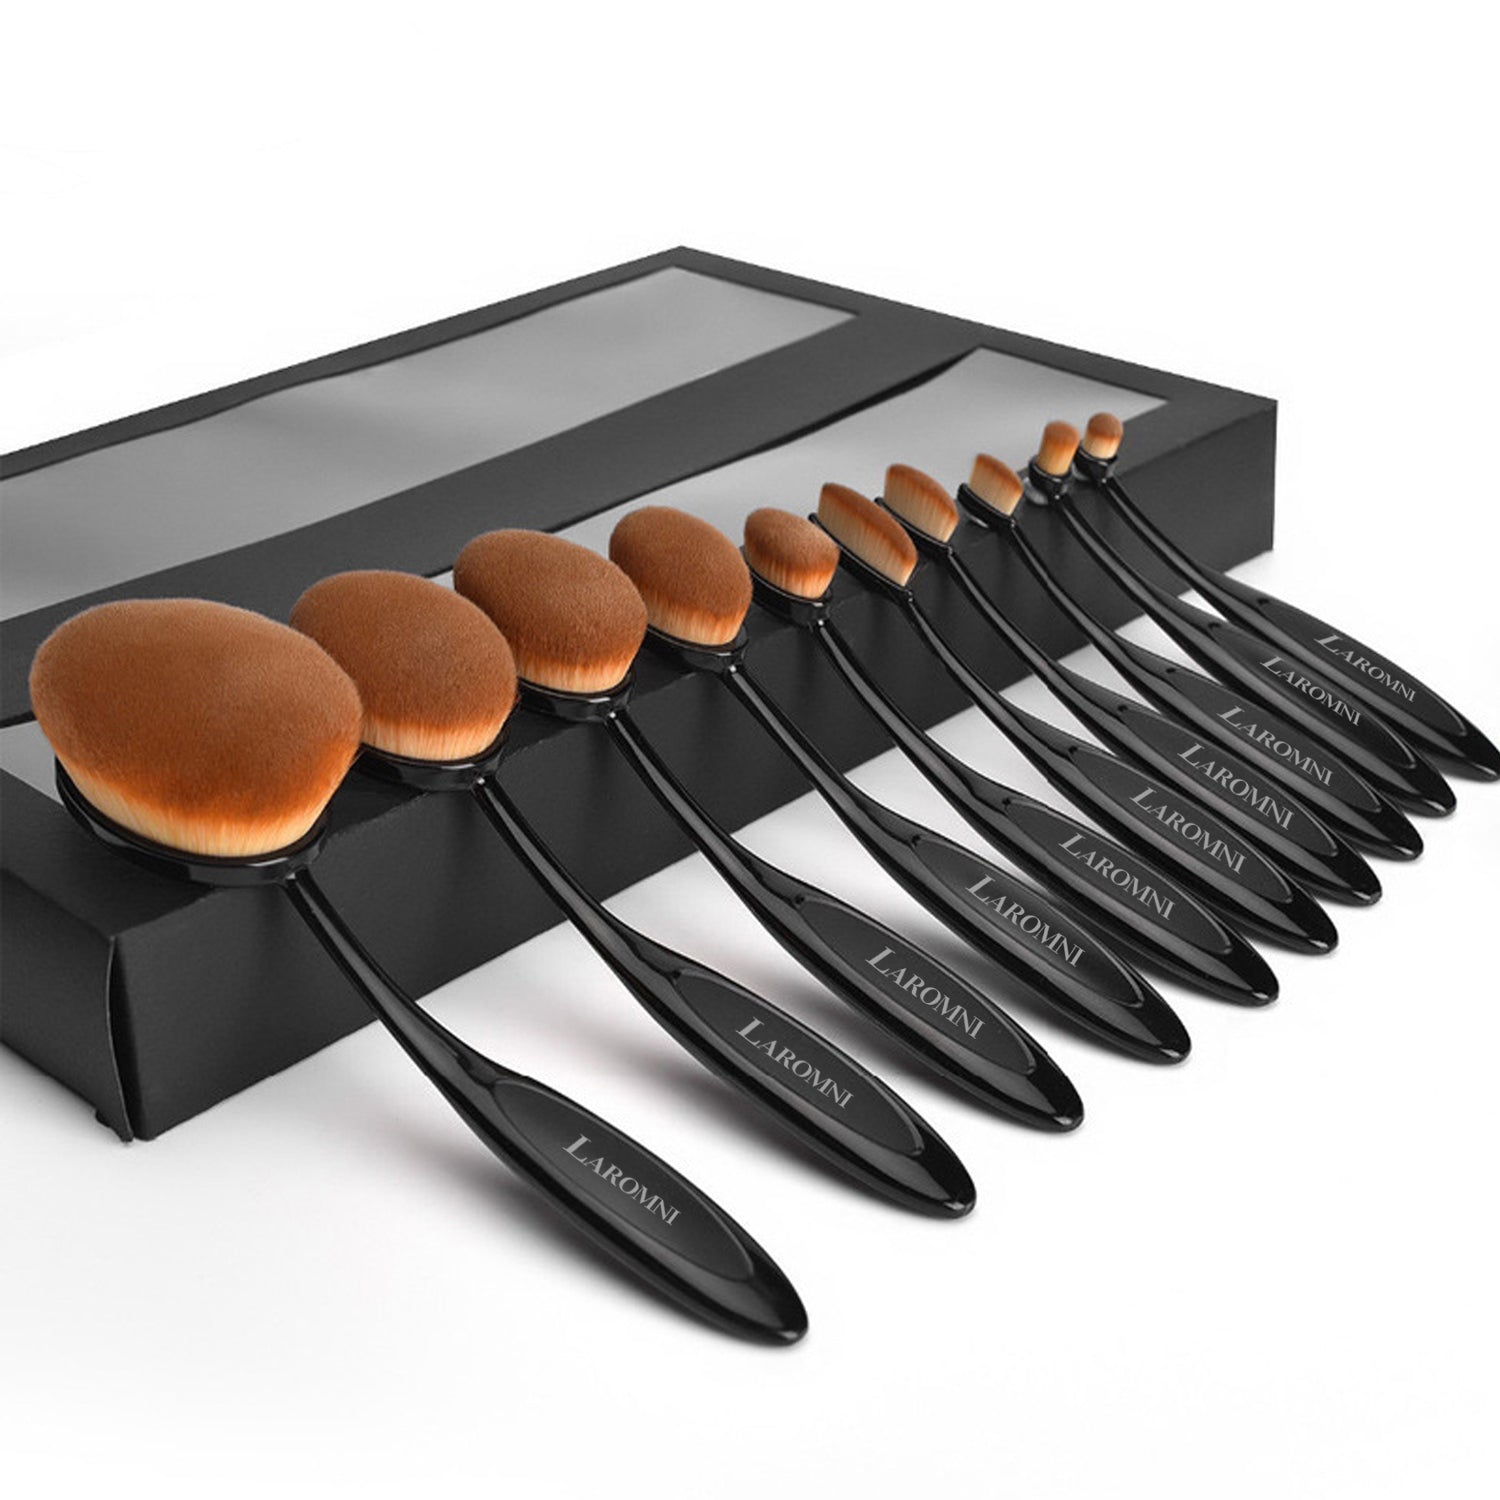 title:10-PCS Oval-Shaped Makeup Brush Set;color:Black